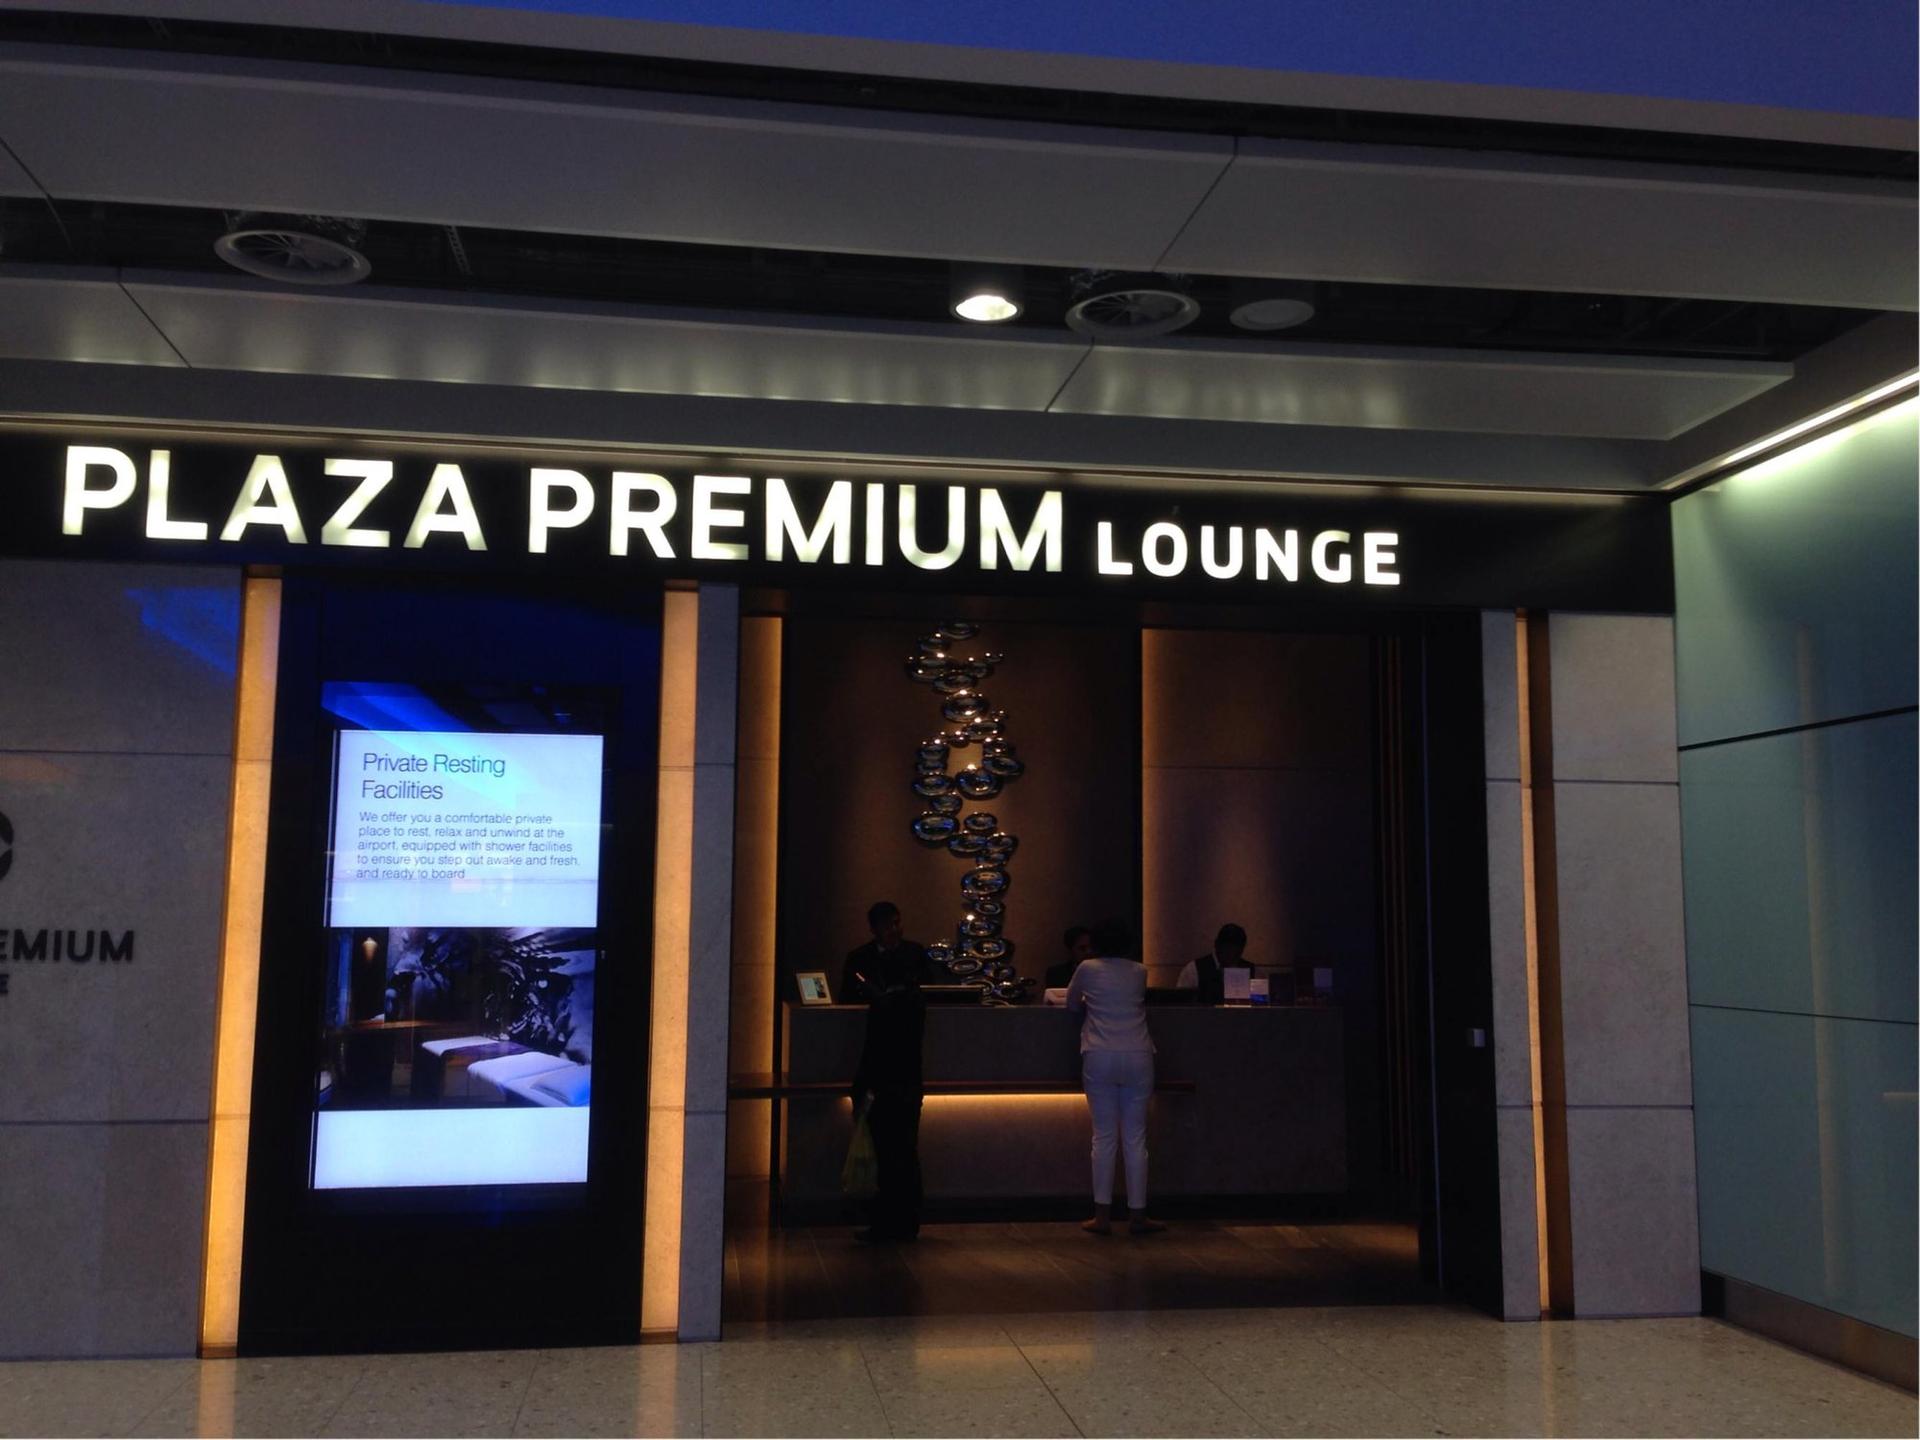 Plaza Premium Lounge image 17 of 73